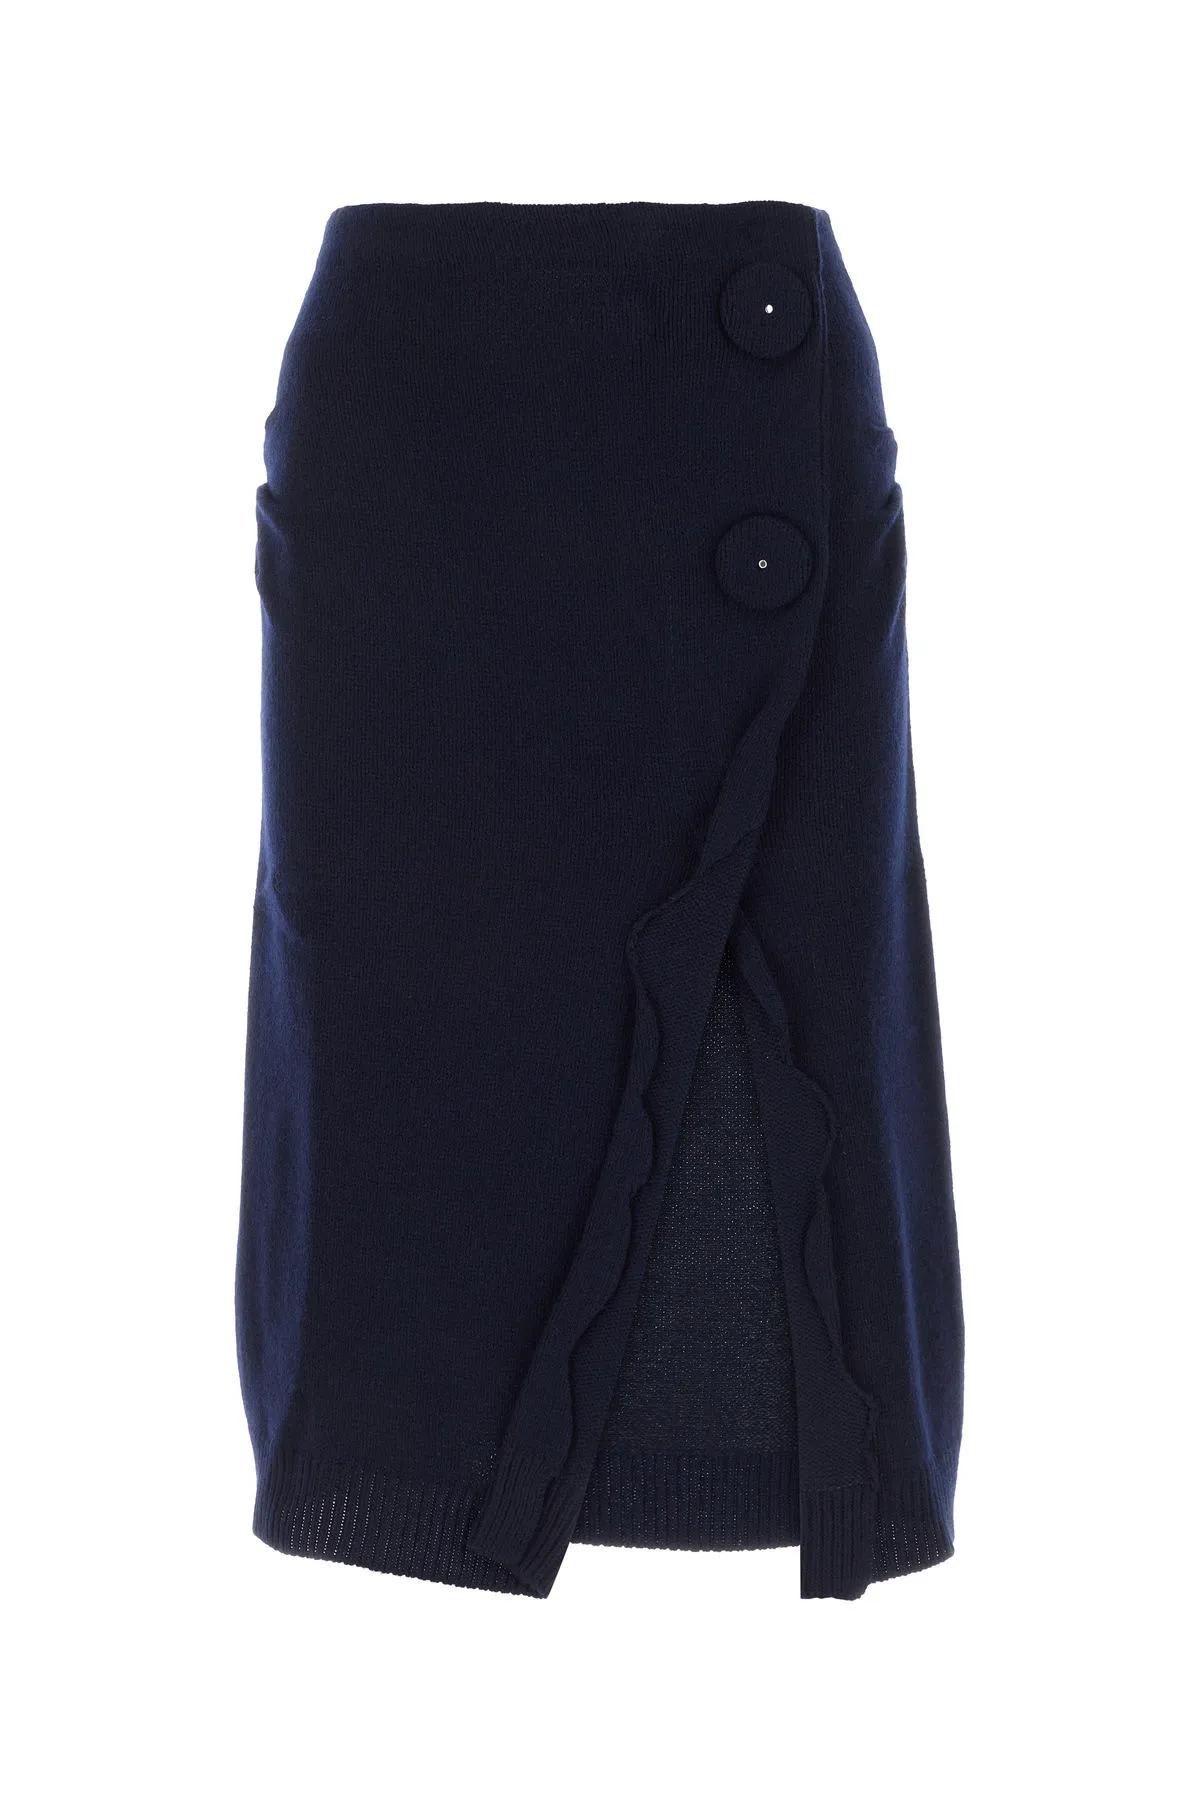 Prada Midnight Blue Wool Blend Skirt